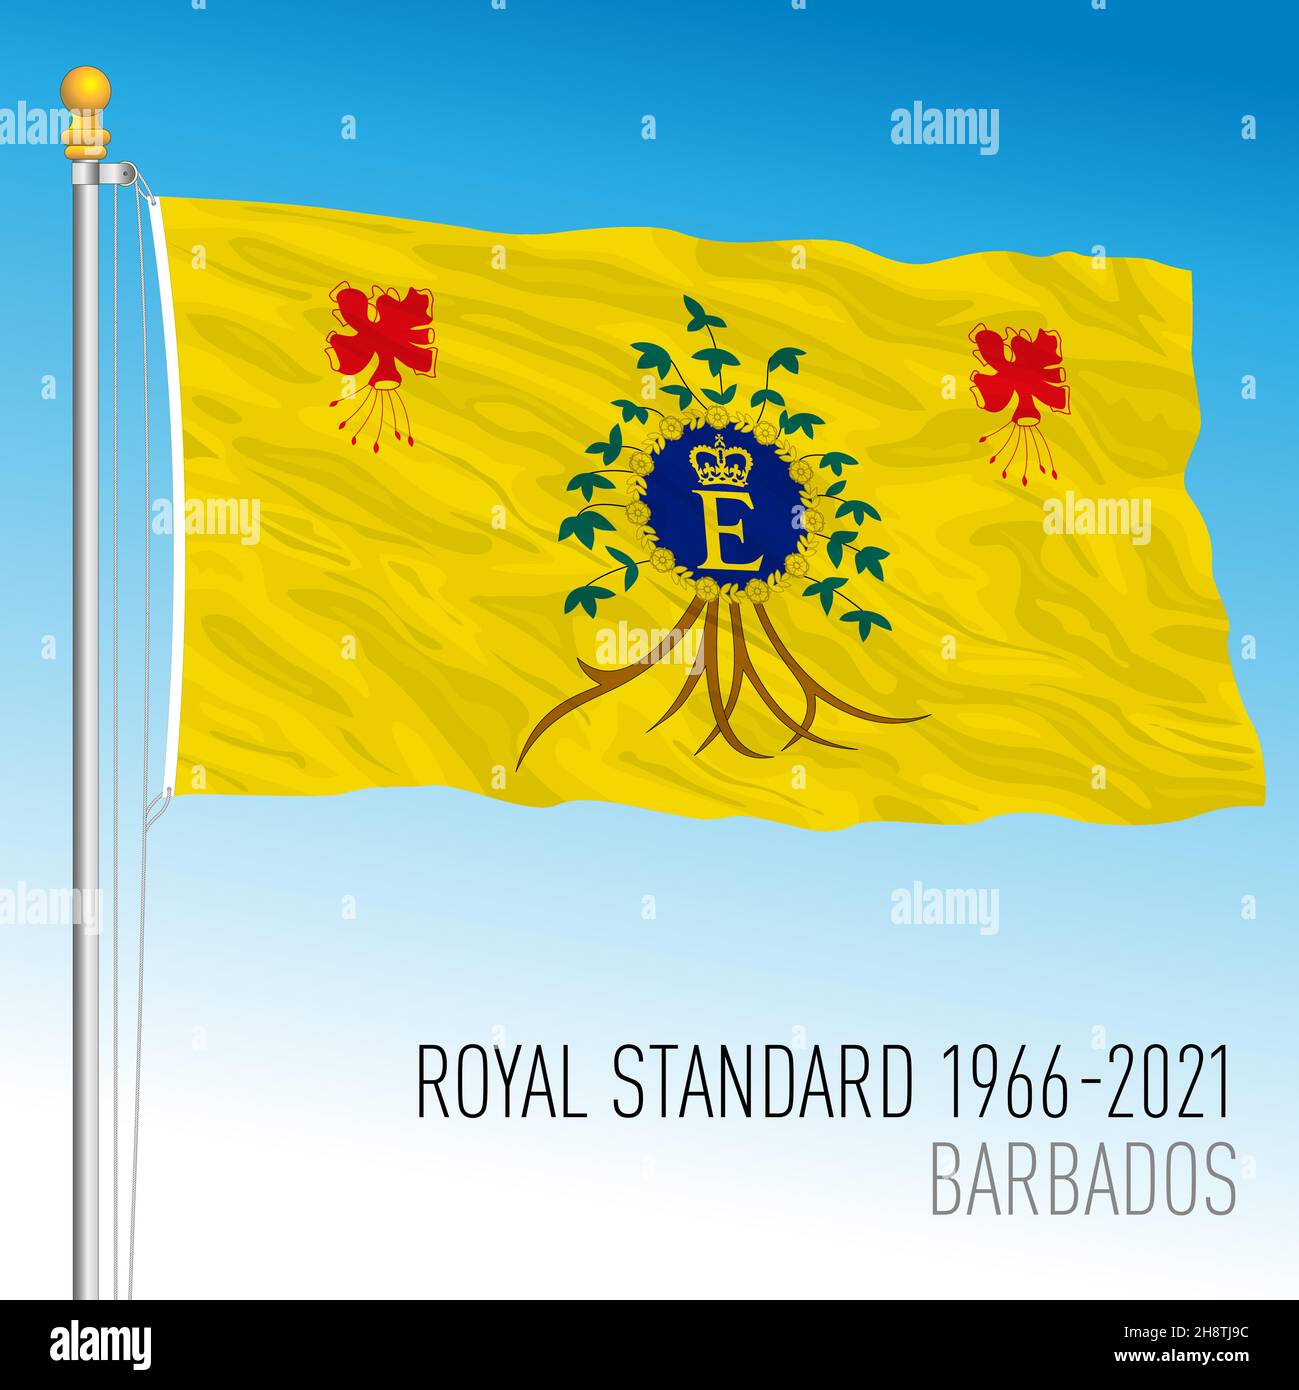 Royal Standard Queen Elizabeth historische Flagge, Barbados, 1966 - 2021, Vektorgrafik Stock Vektor